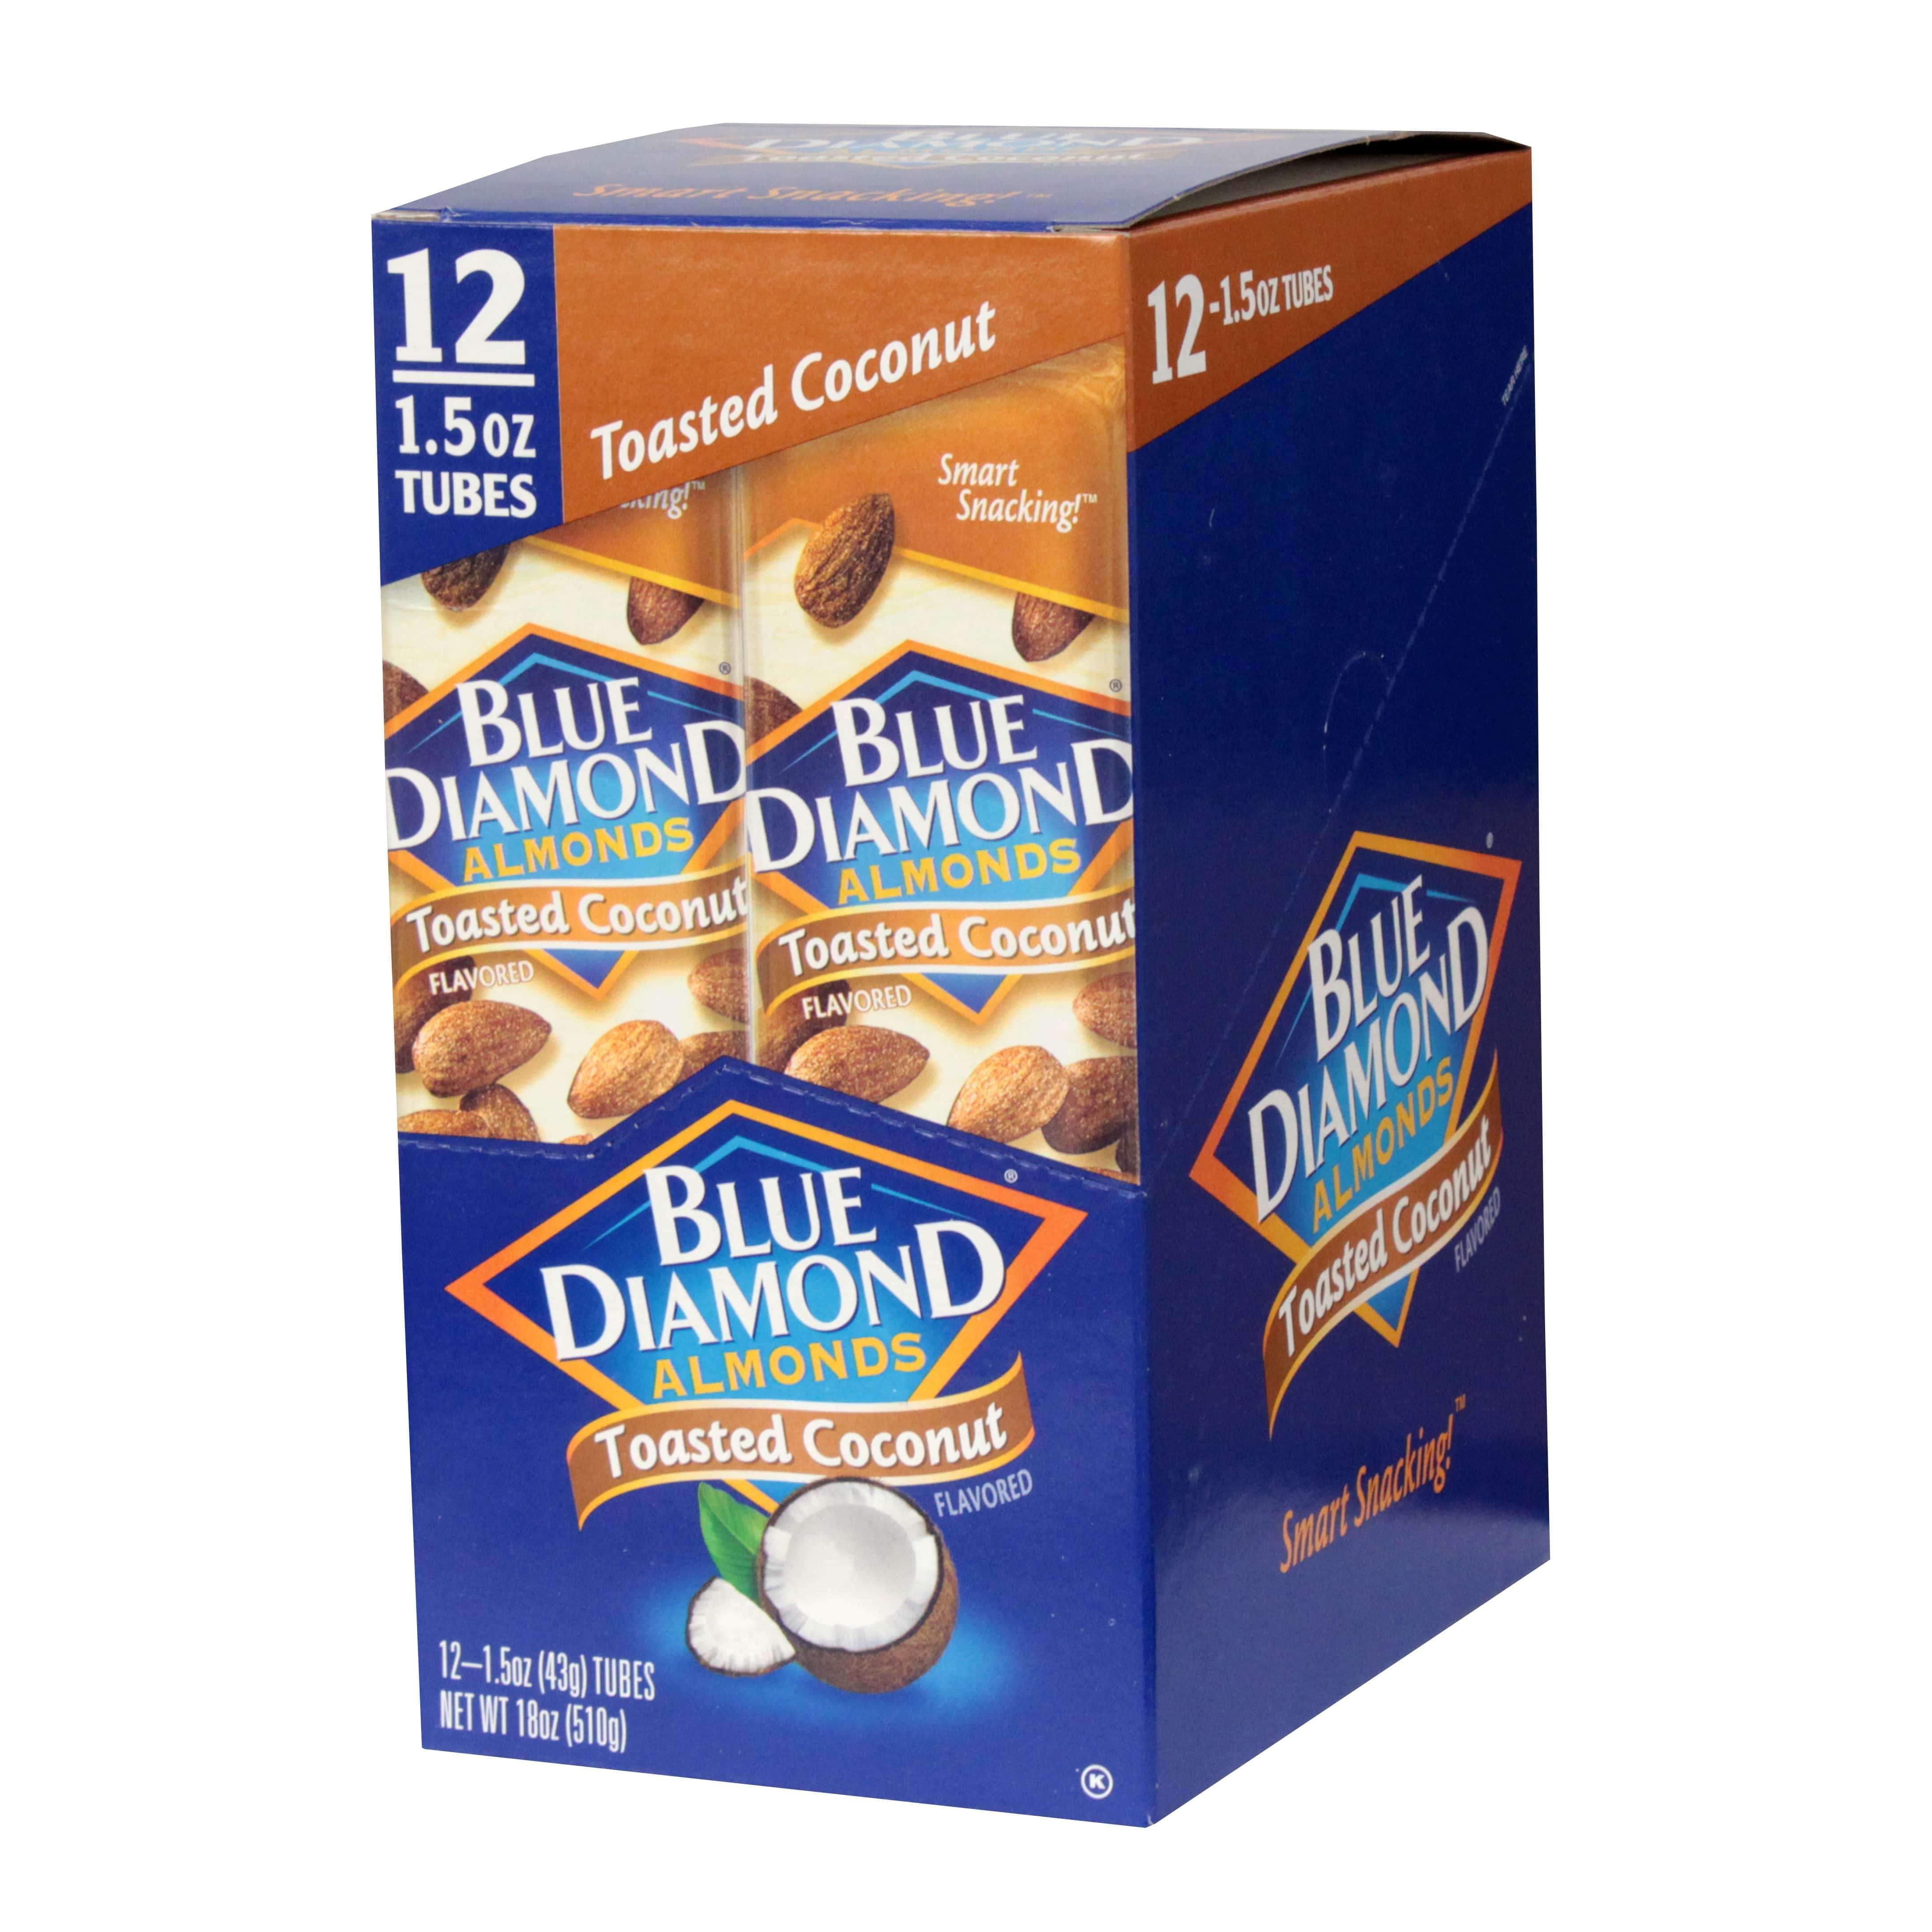 Blue Diamond Almonds Blue Diamond Almonds Toasted Coconut 1.5 Oz-12 Count 